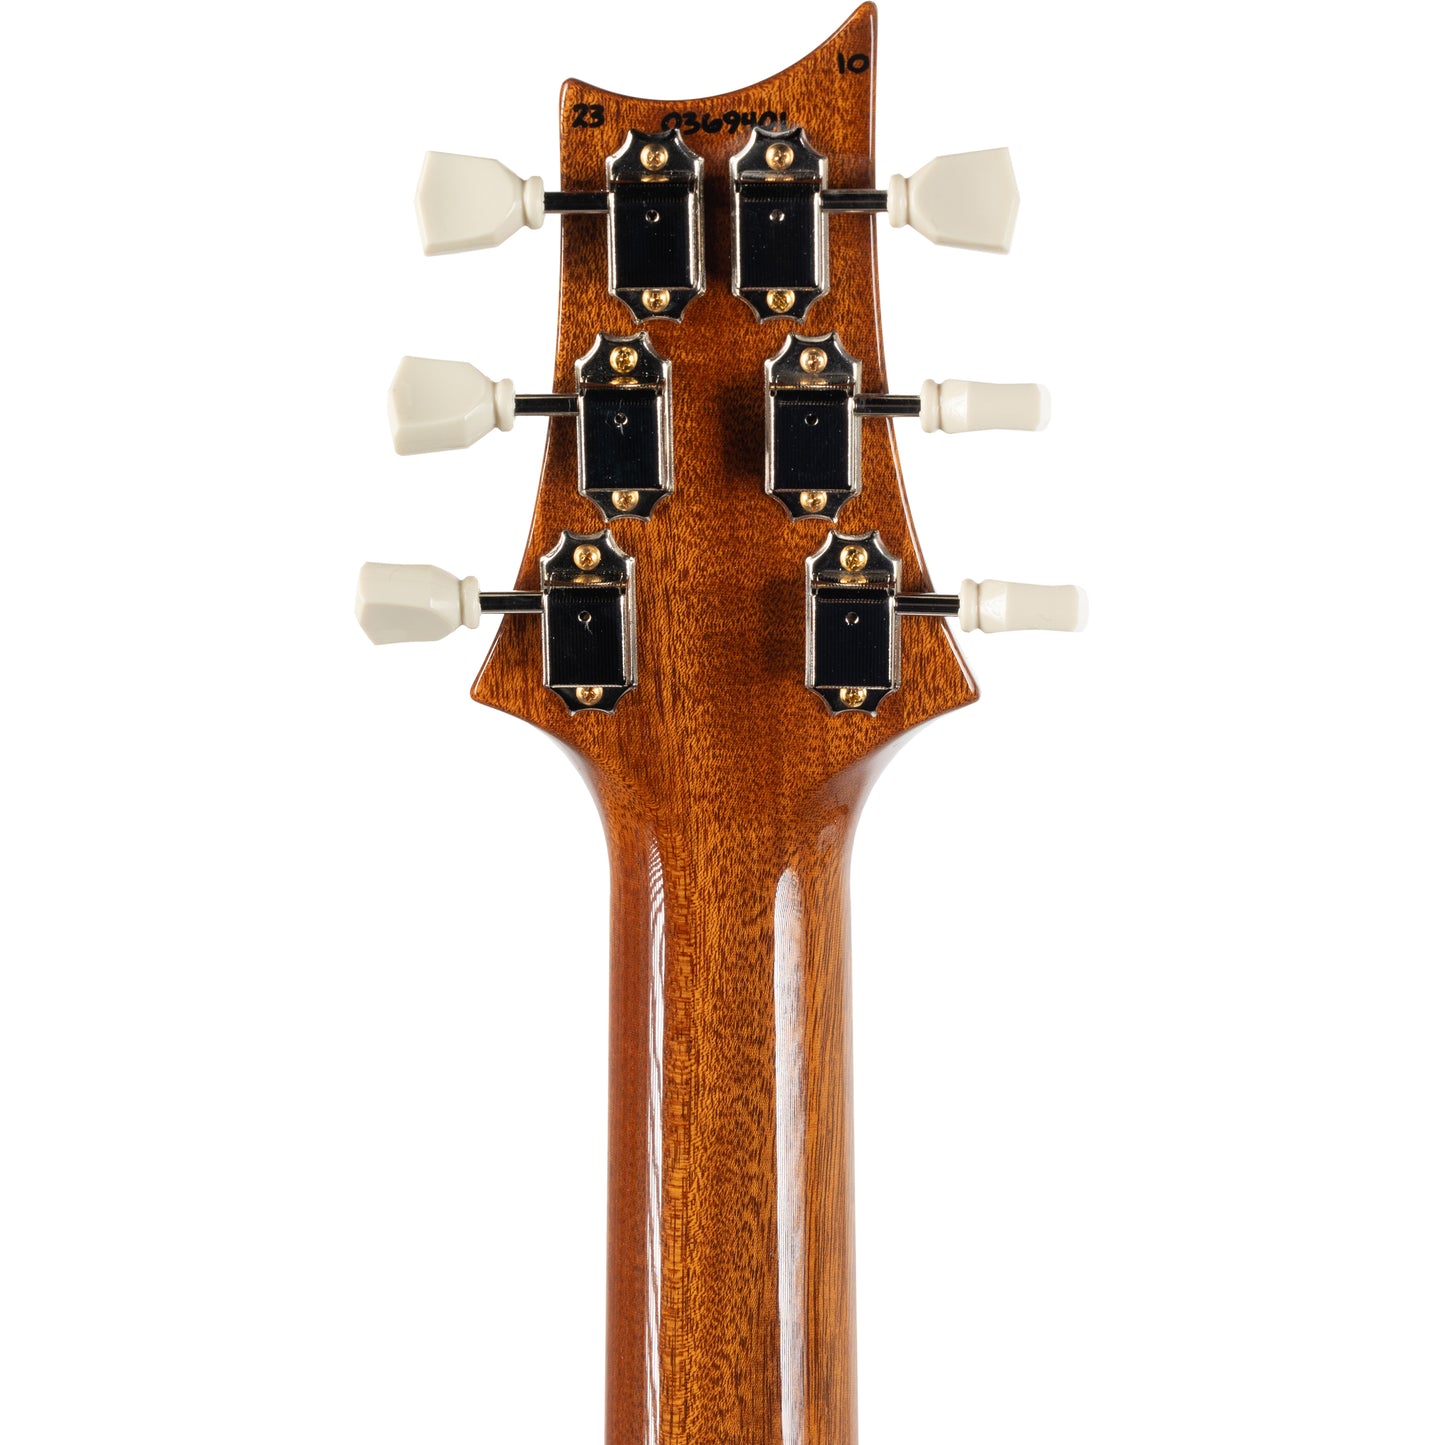 PRS McCarty Singlecut 594 10 Top Electric Guitar - Yellow Tiger